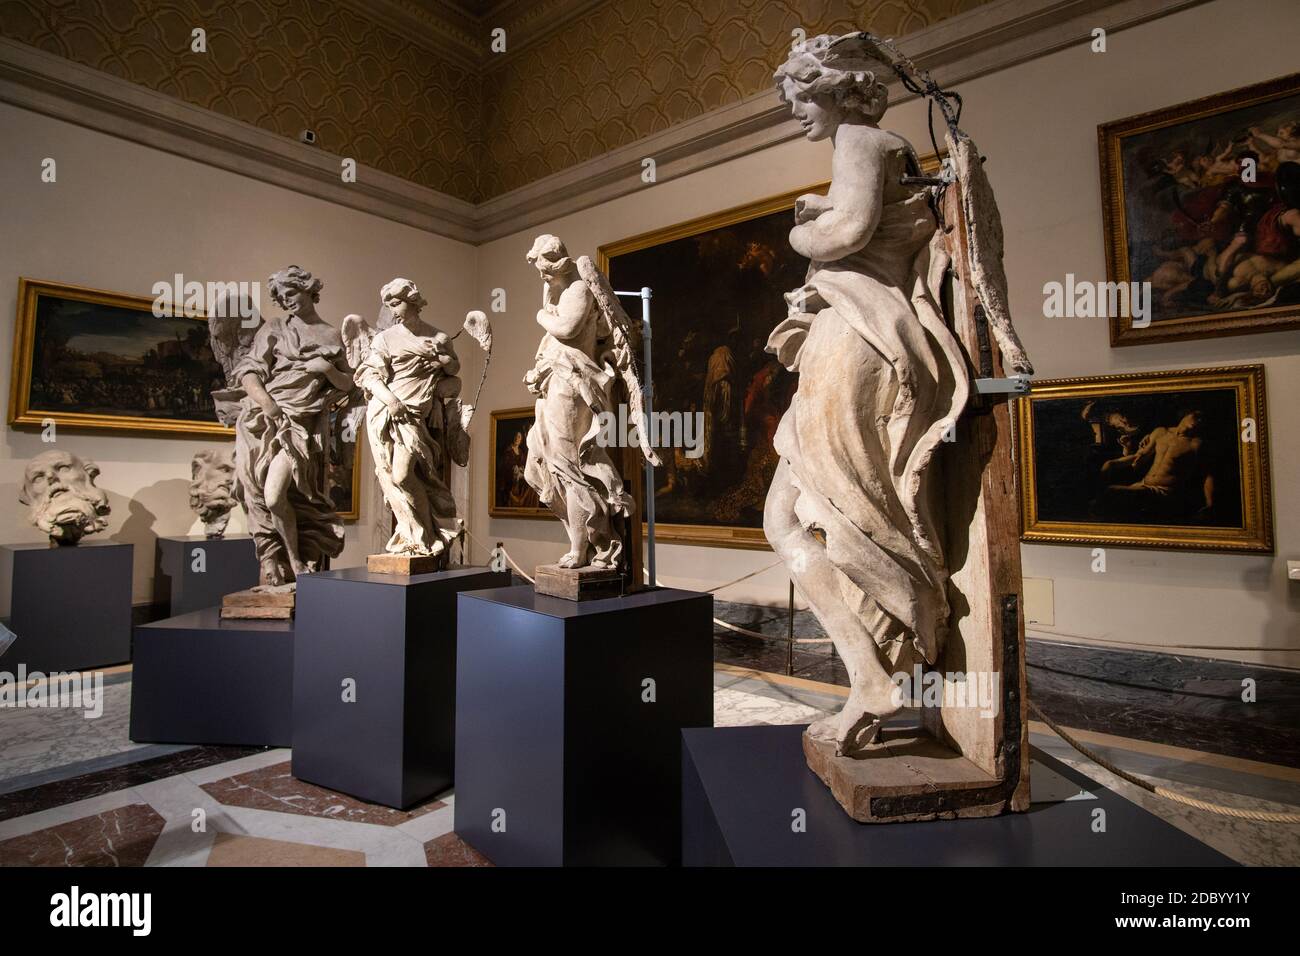 Vatican city, Rome - March 07, 2018: Bernini preparatory models of angels in Pinacoteca gallery in Vatican museums Stock Photo